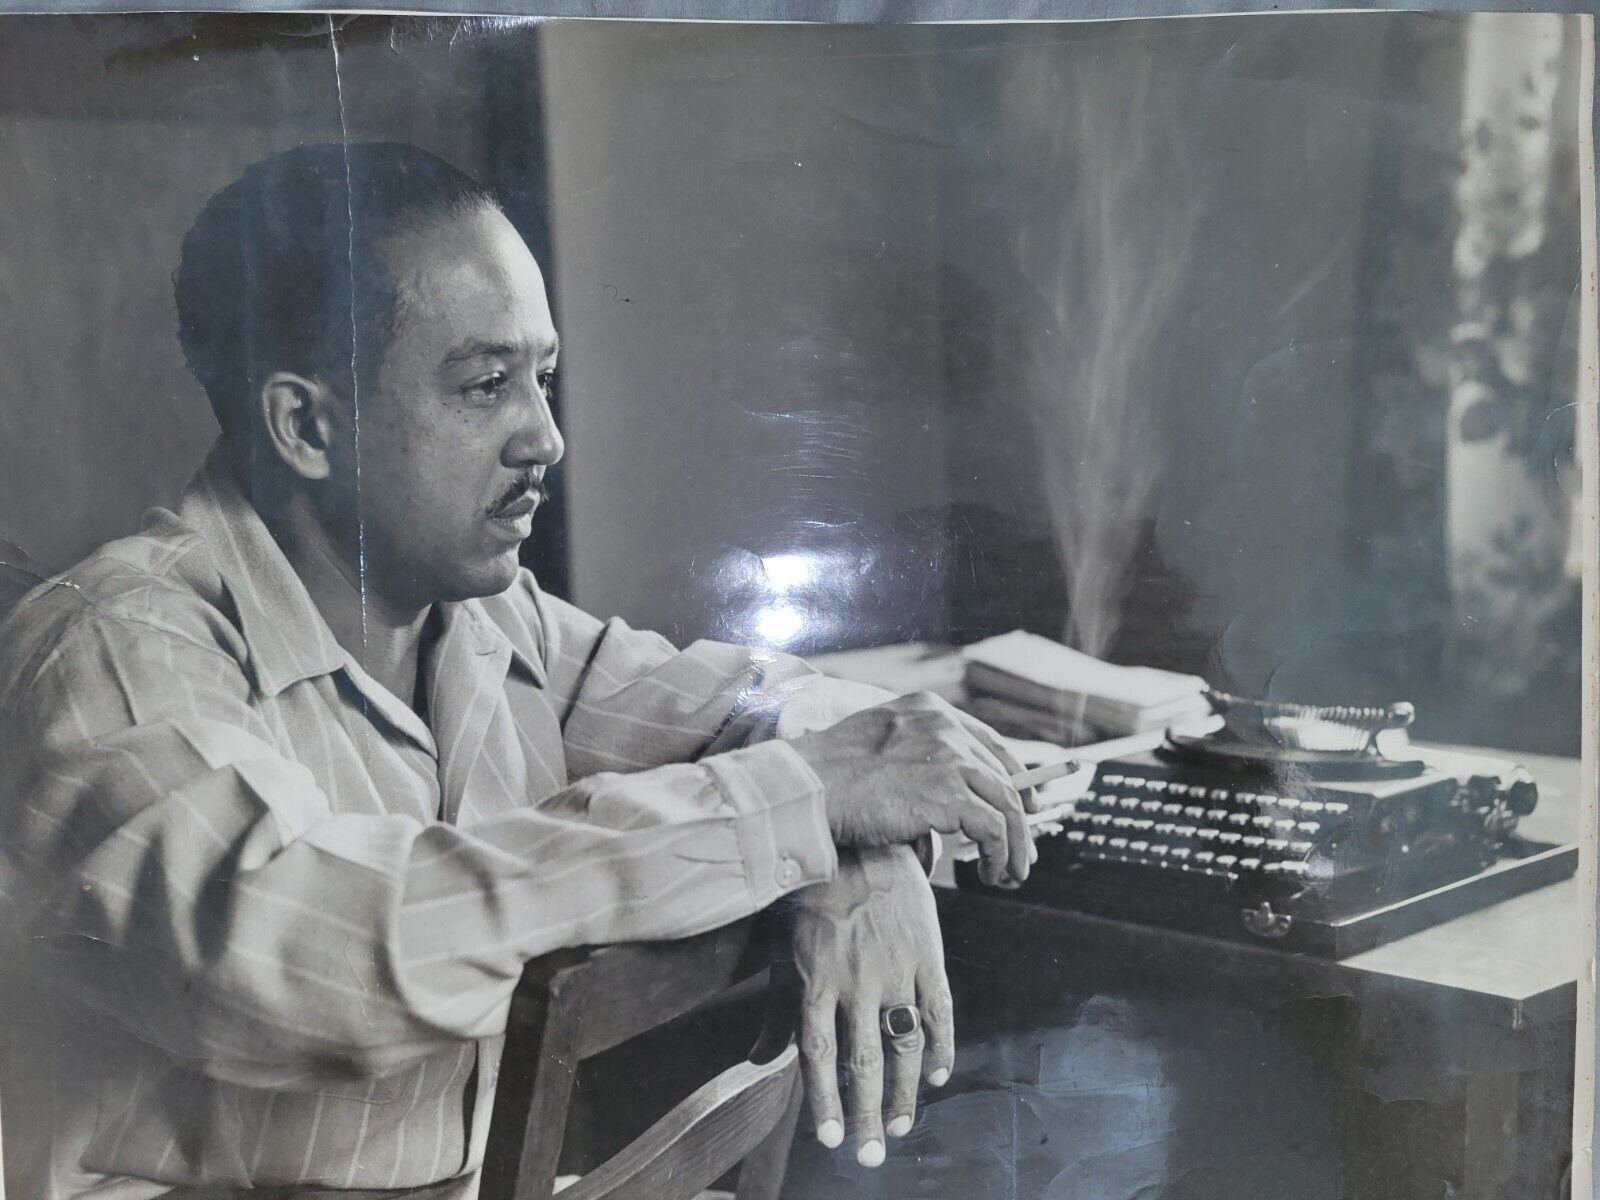 Super Rare Photograph Of Langston Hughes At His Typewriter